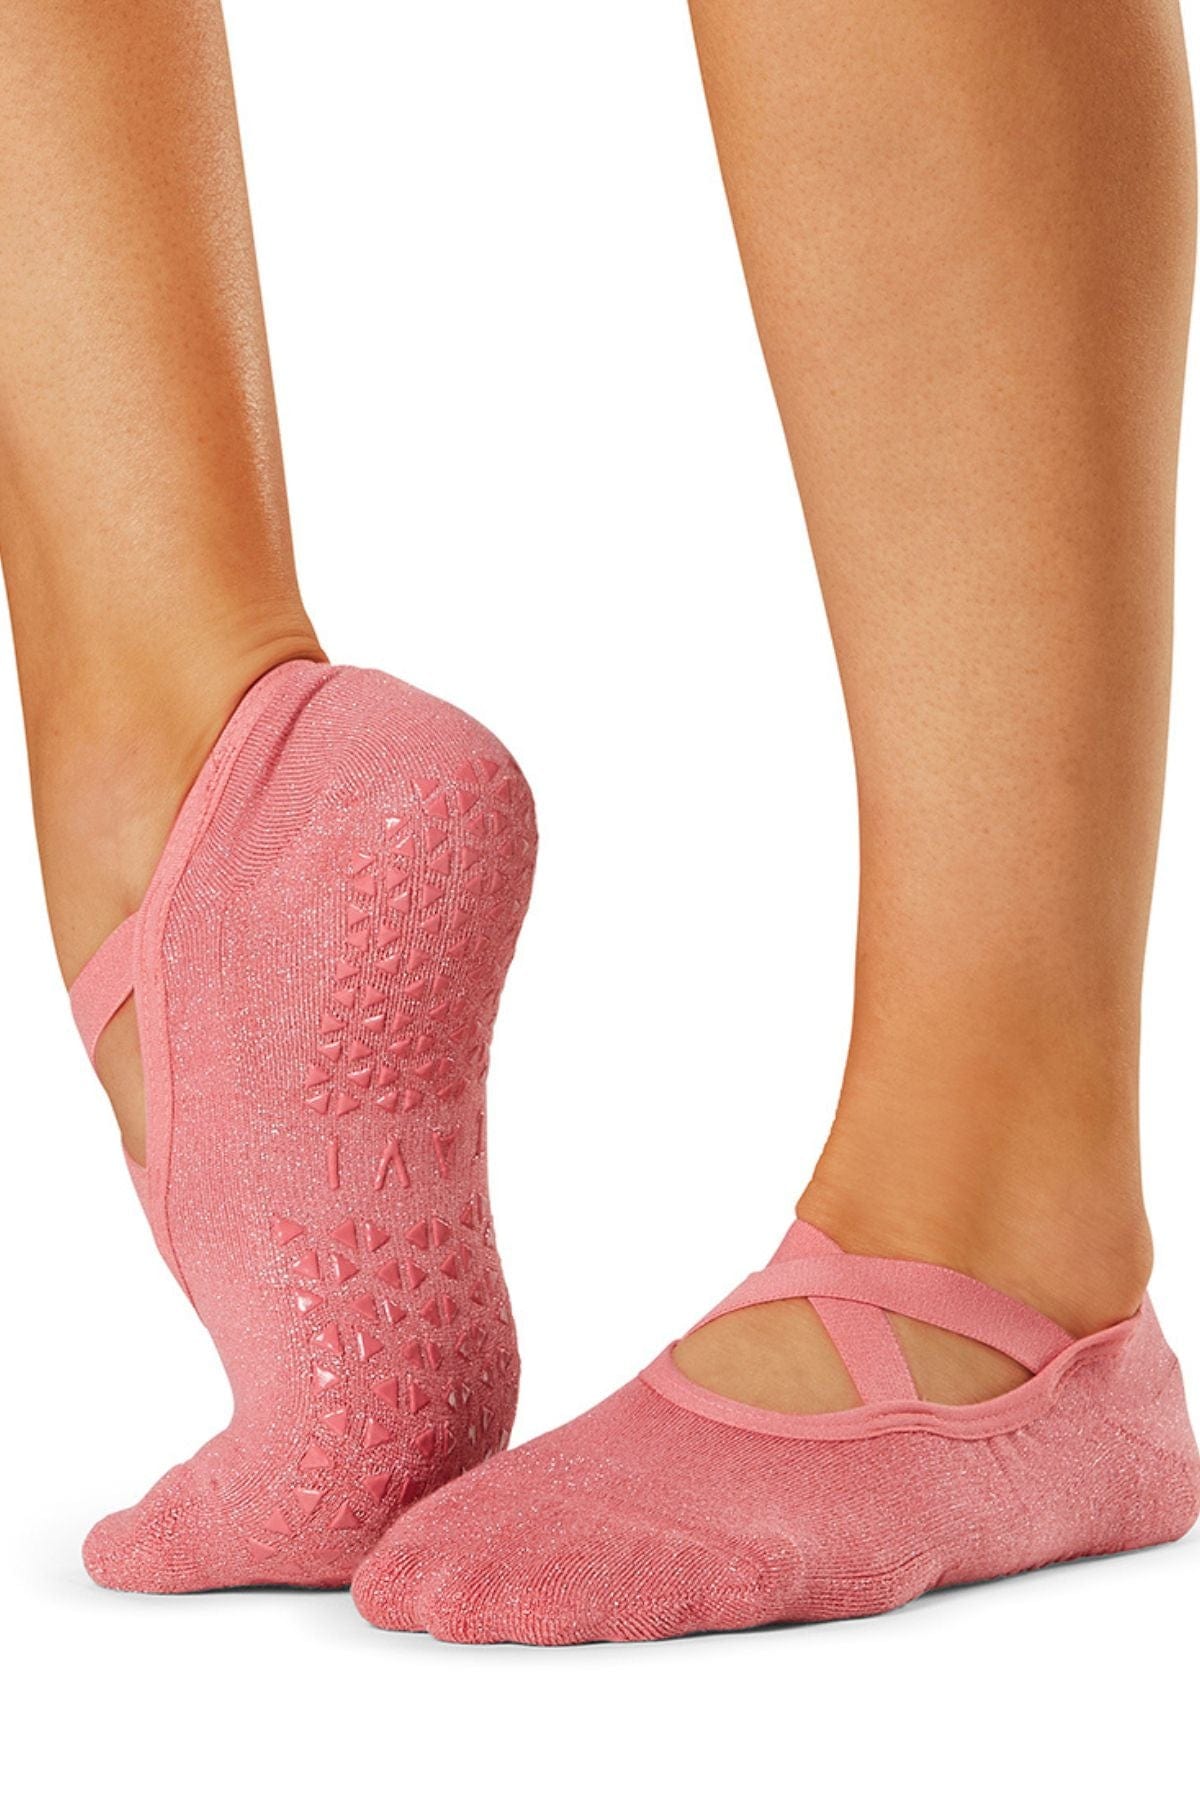 Chloe Grip Socks  Grip socks, How to look pretty, Chloe